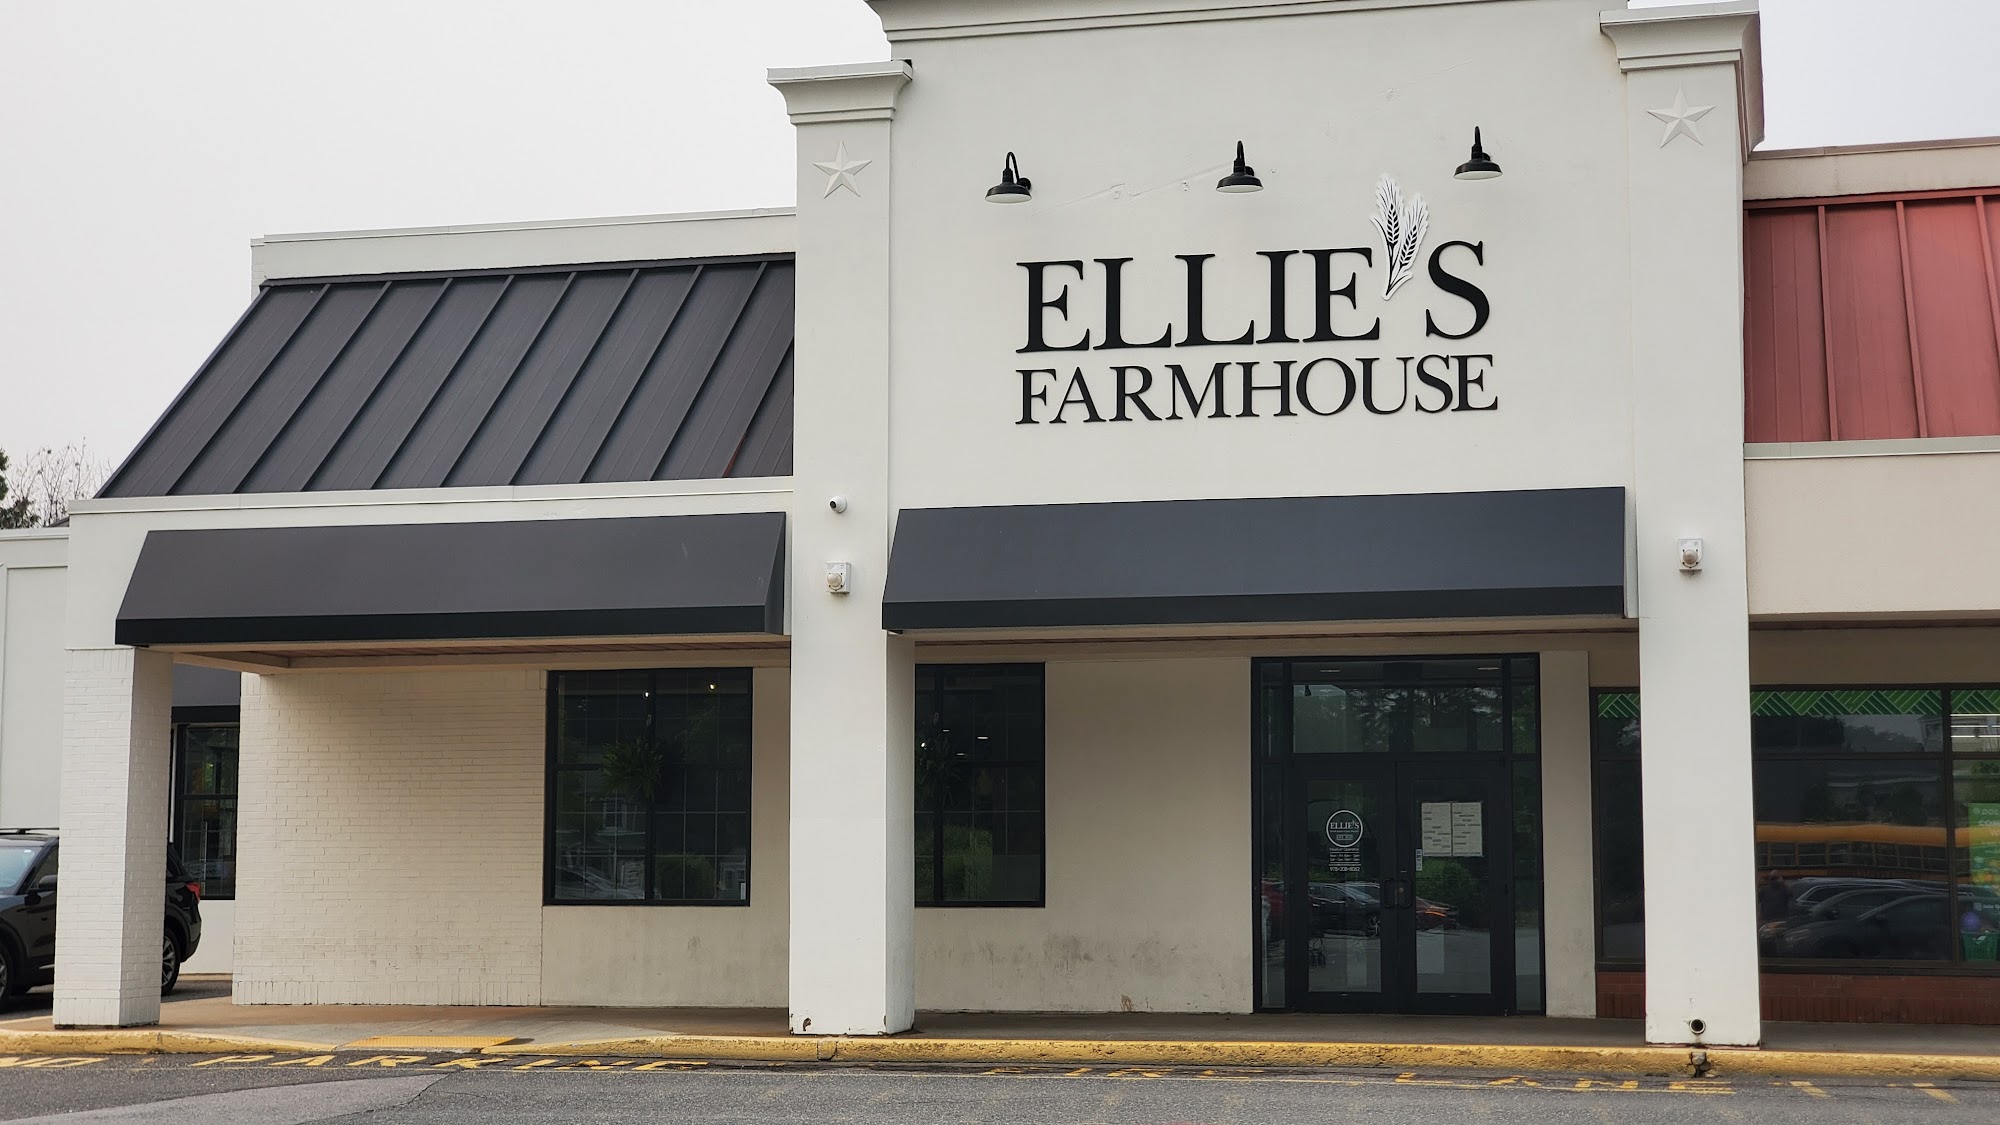 Ellie’s Farmhouse